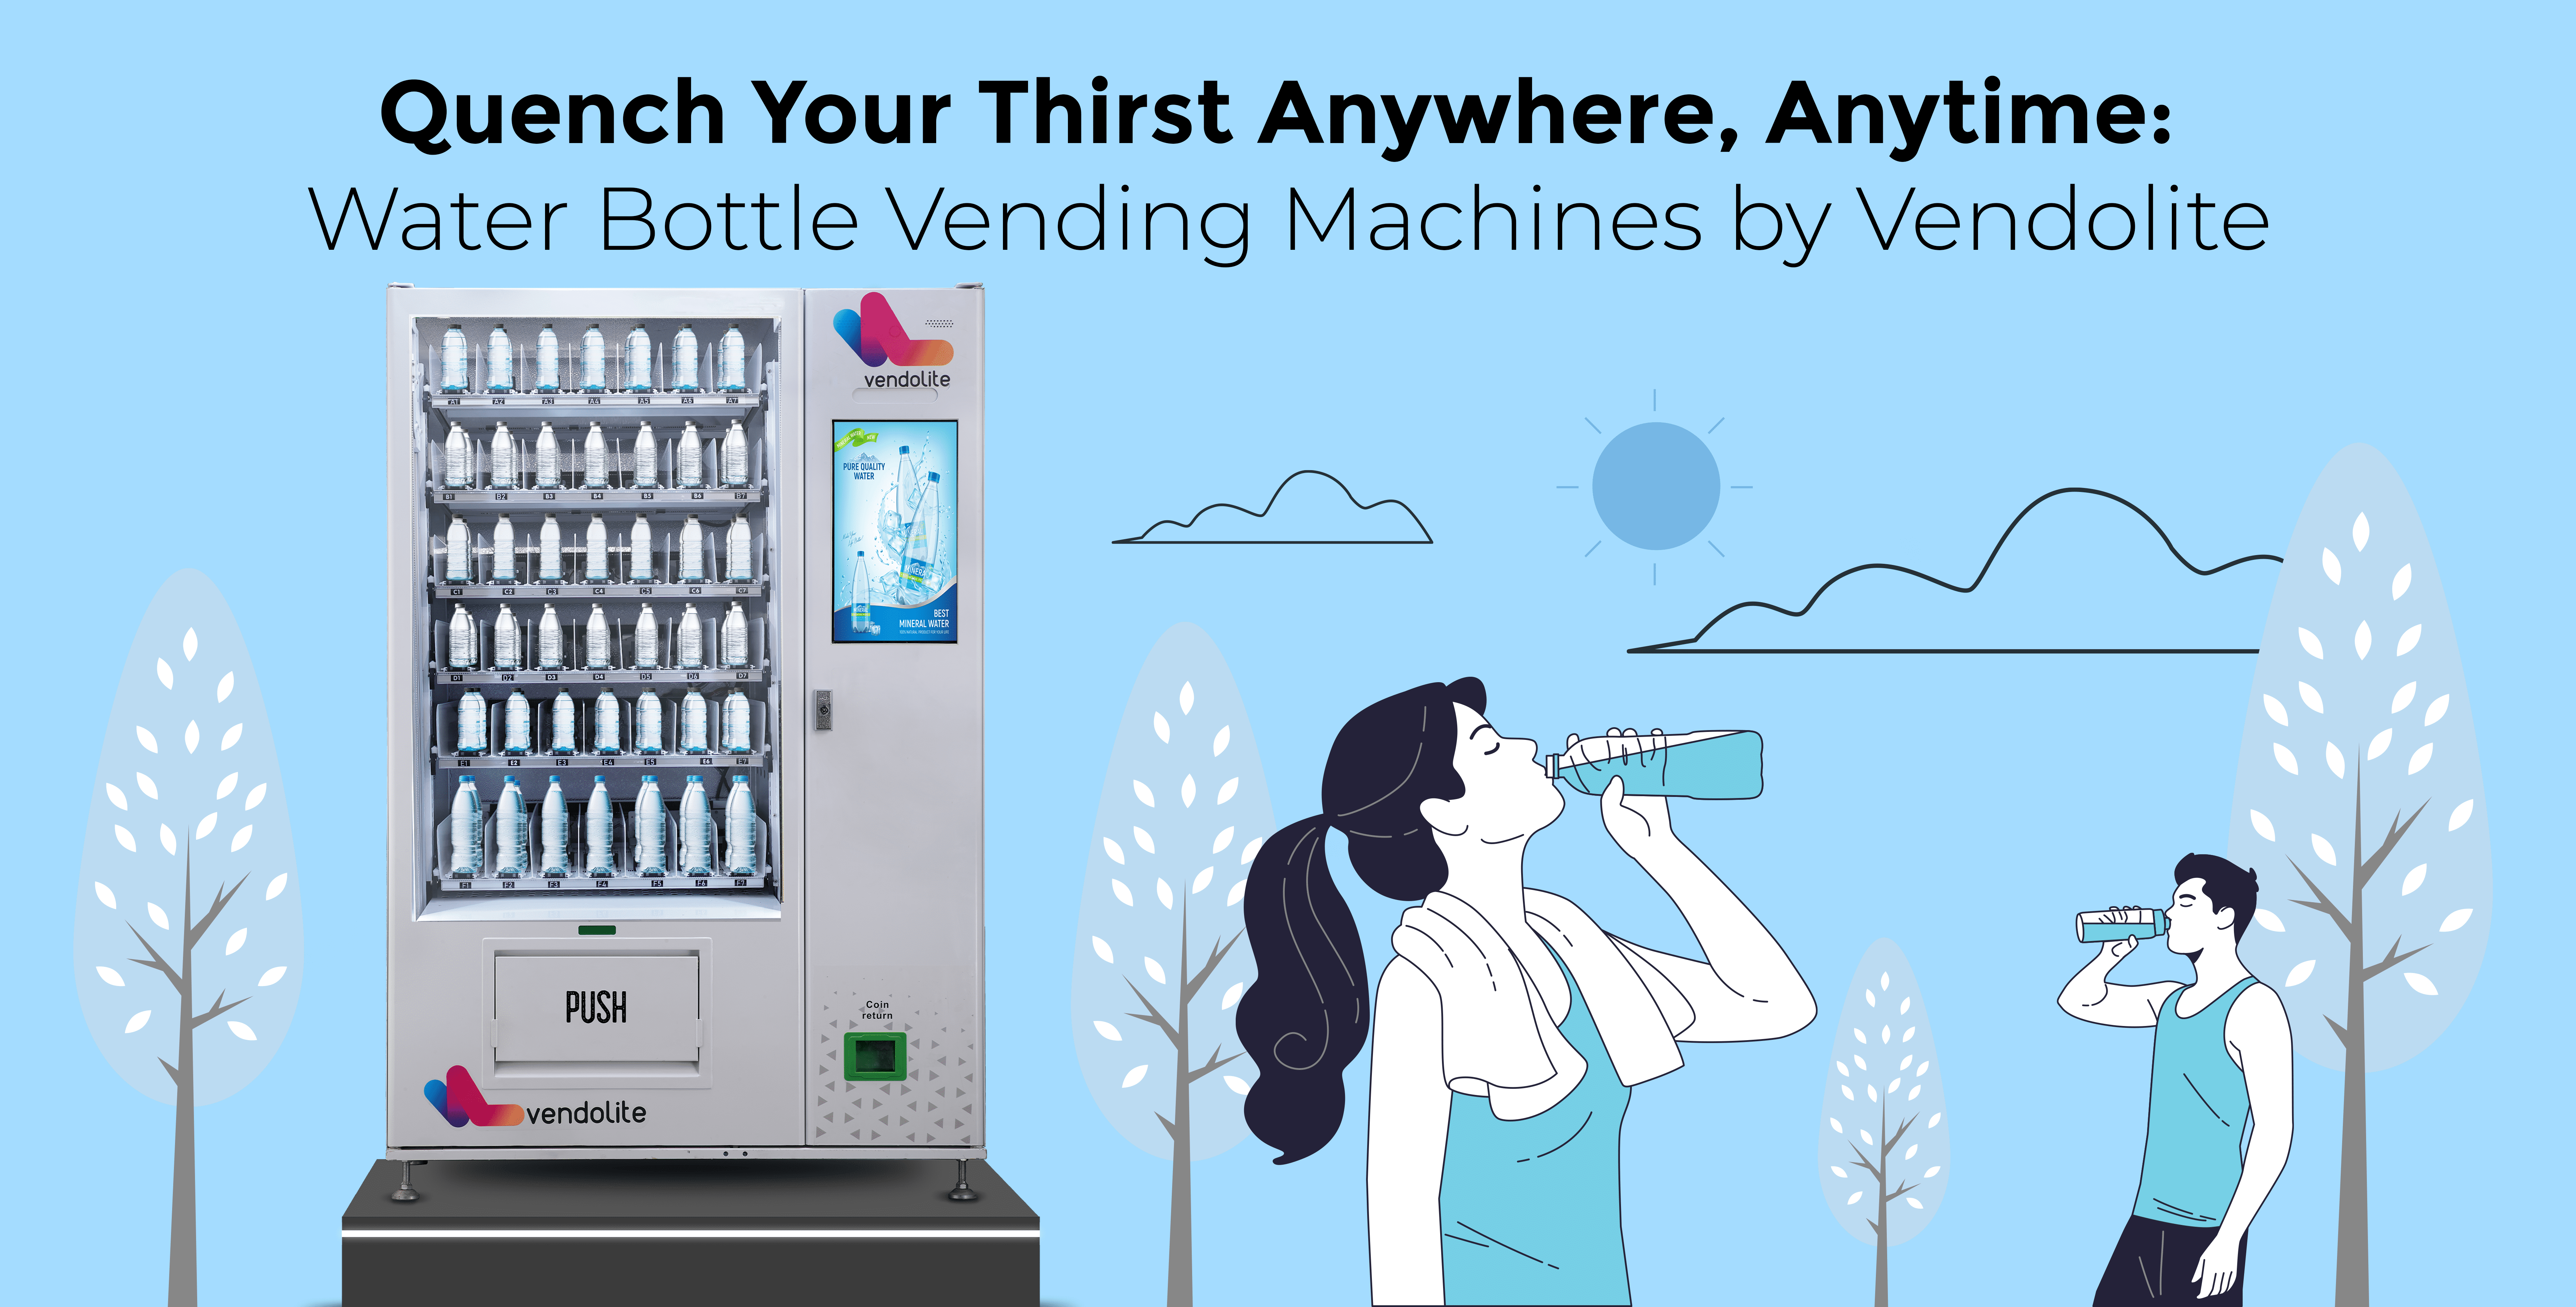 Spiritual and Religious Vending Machines by Vendolite